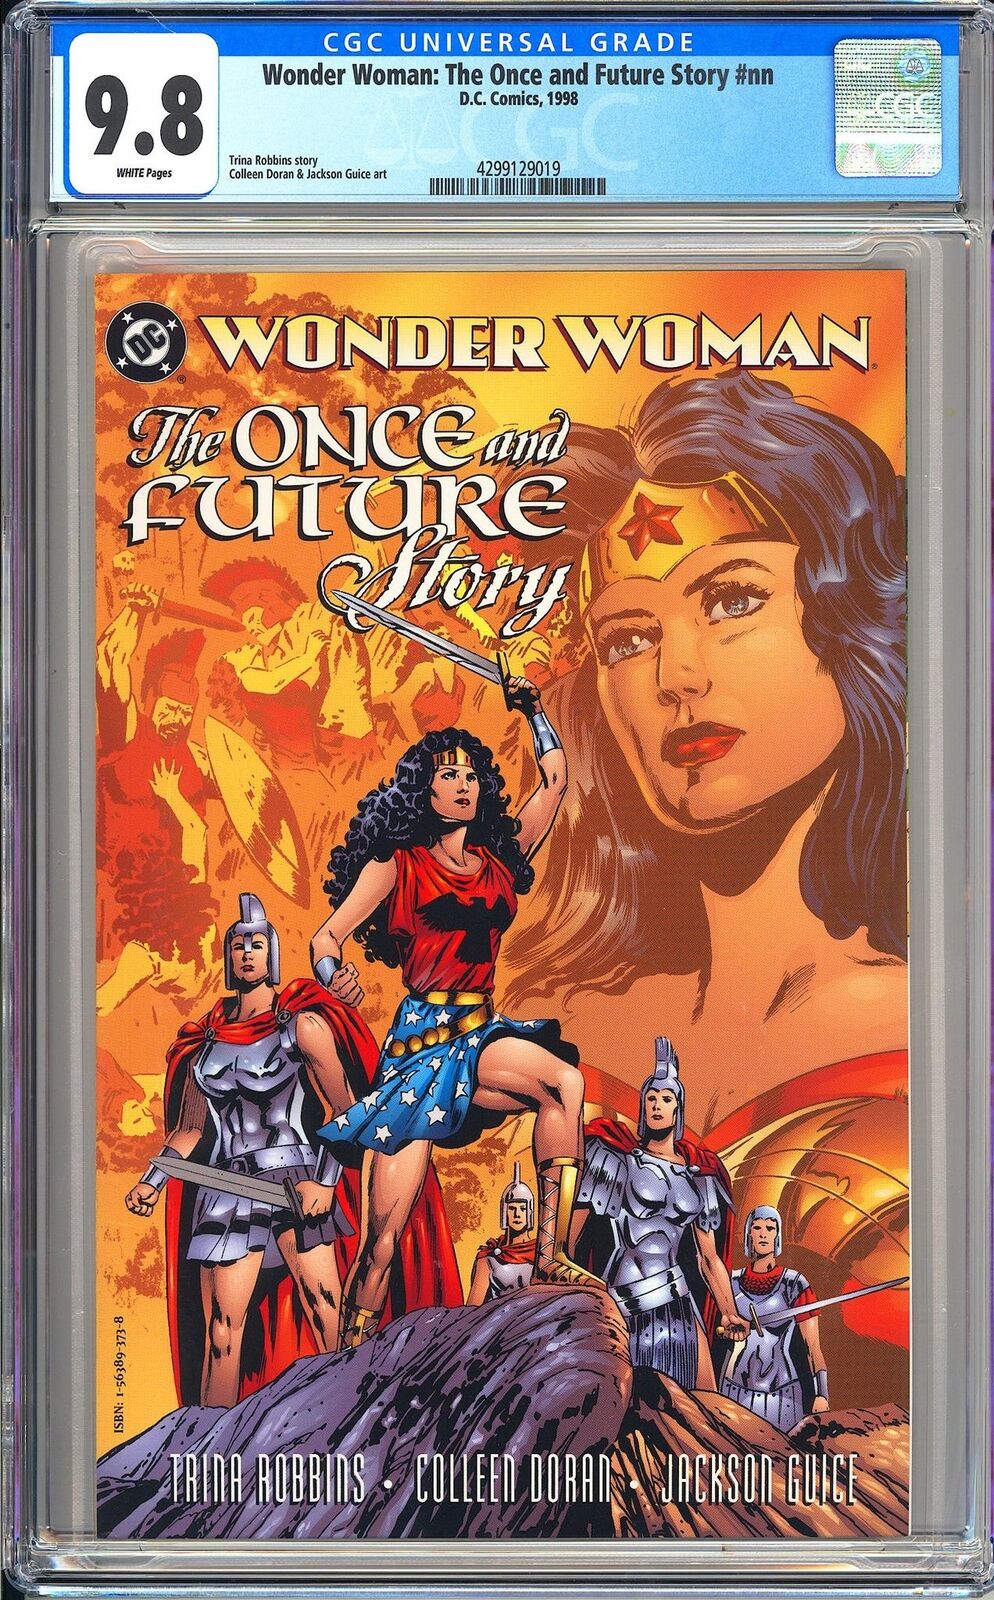 Wonder Woman Once & Future Story nn CGC 9.8 1998 4299129019